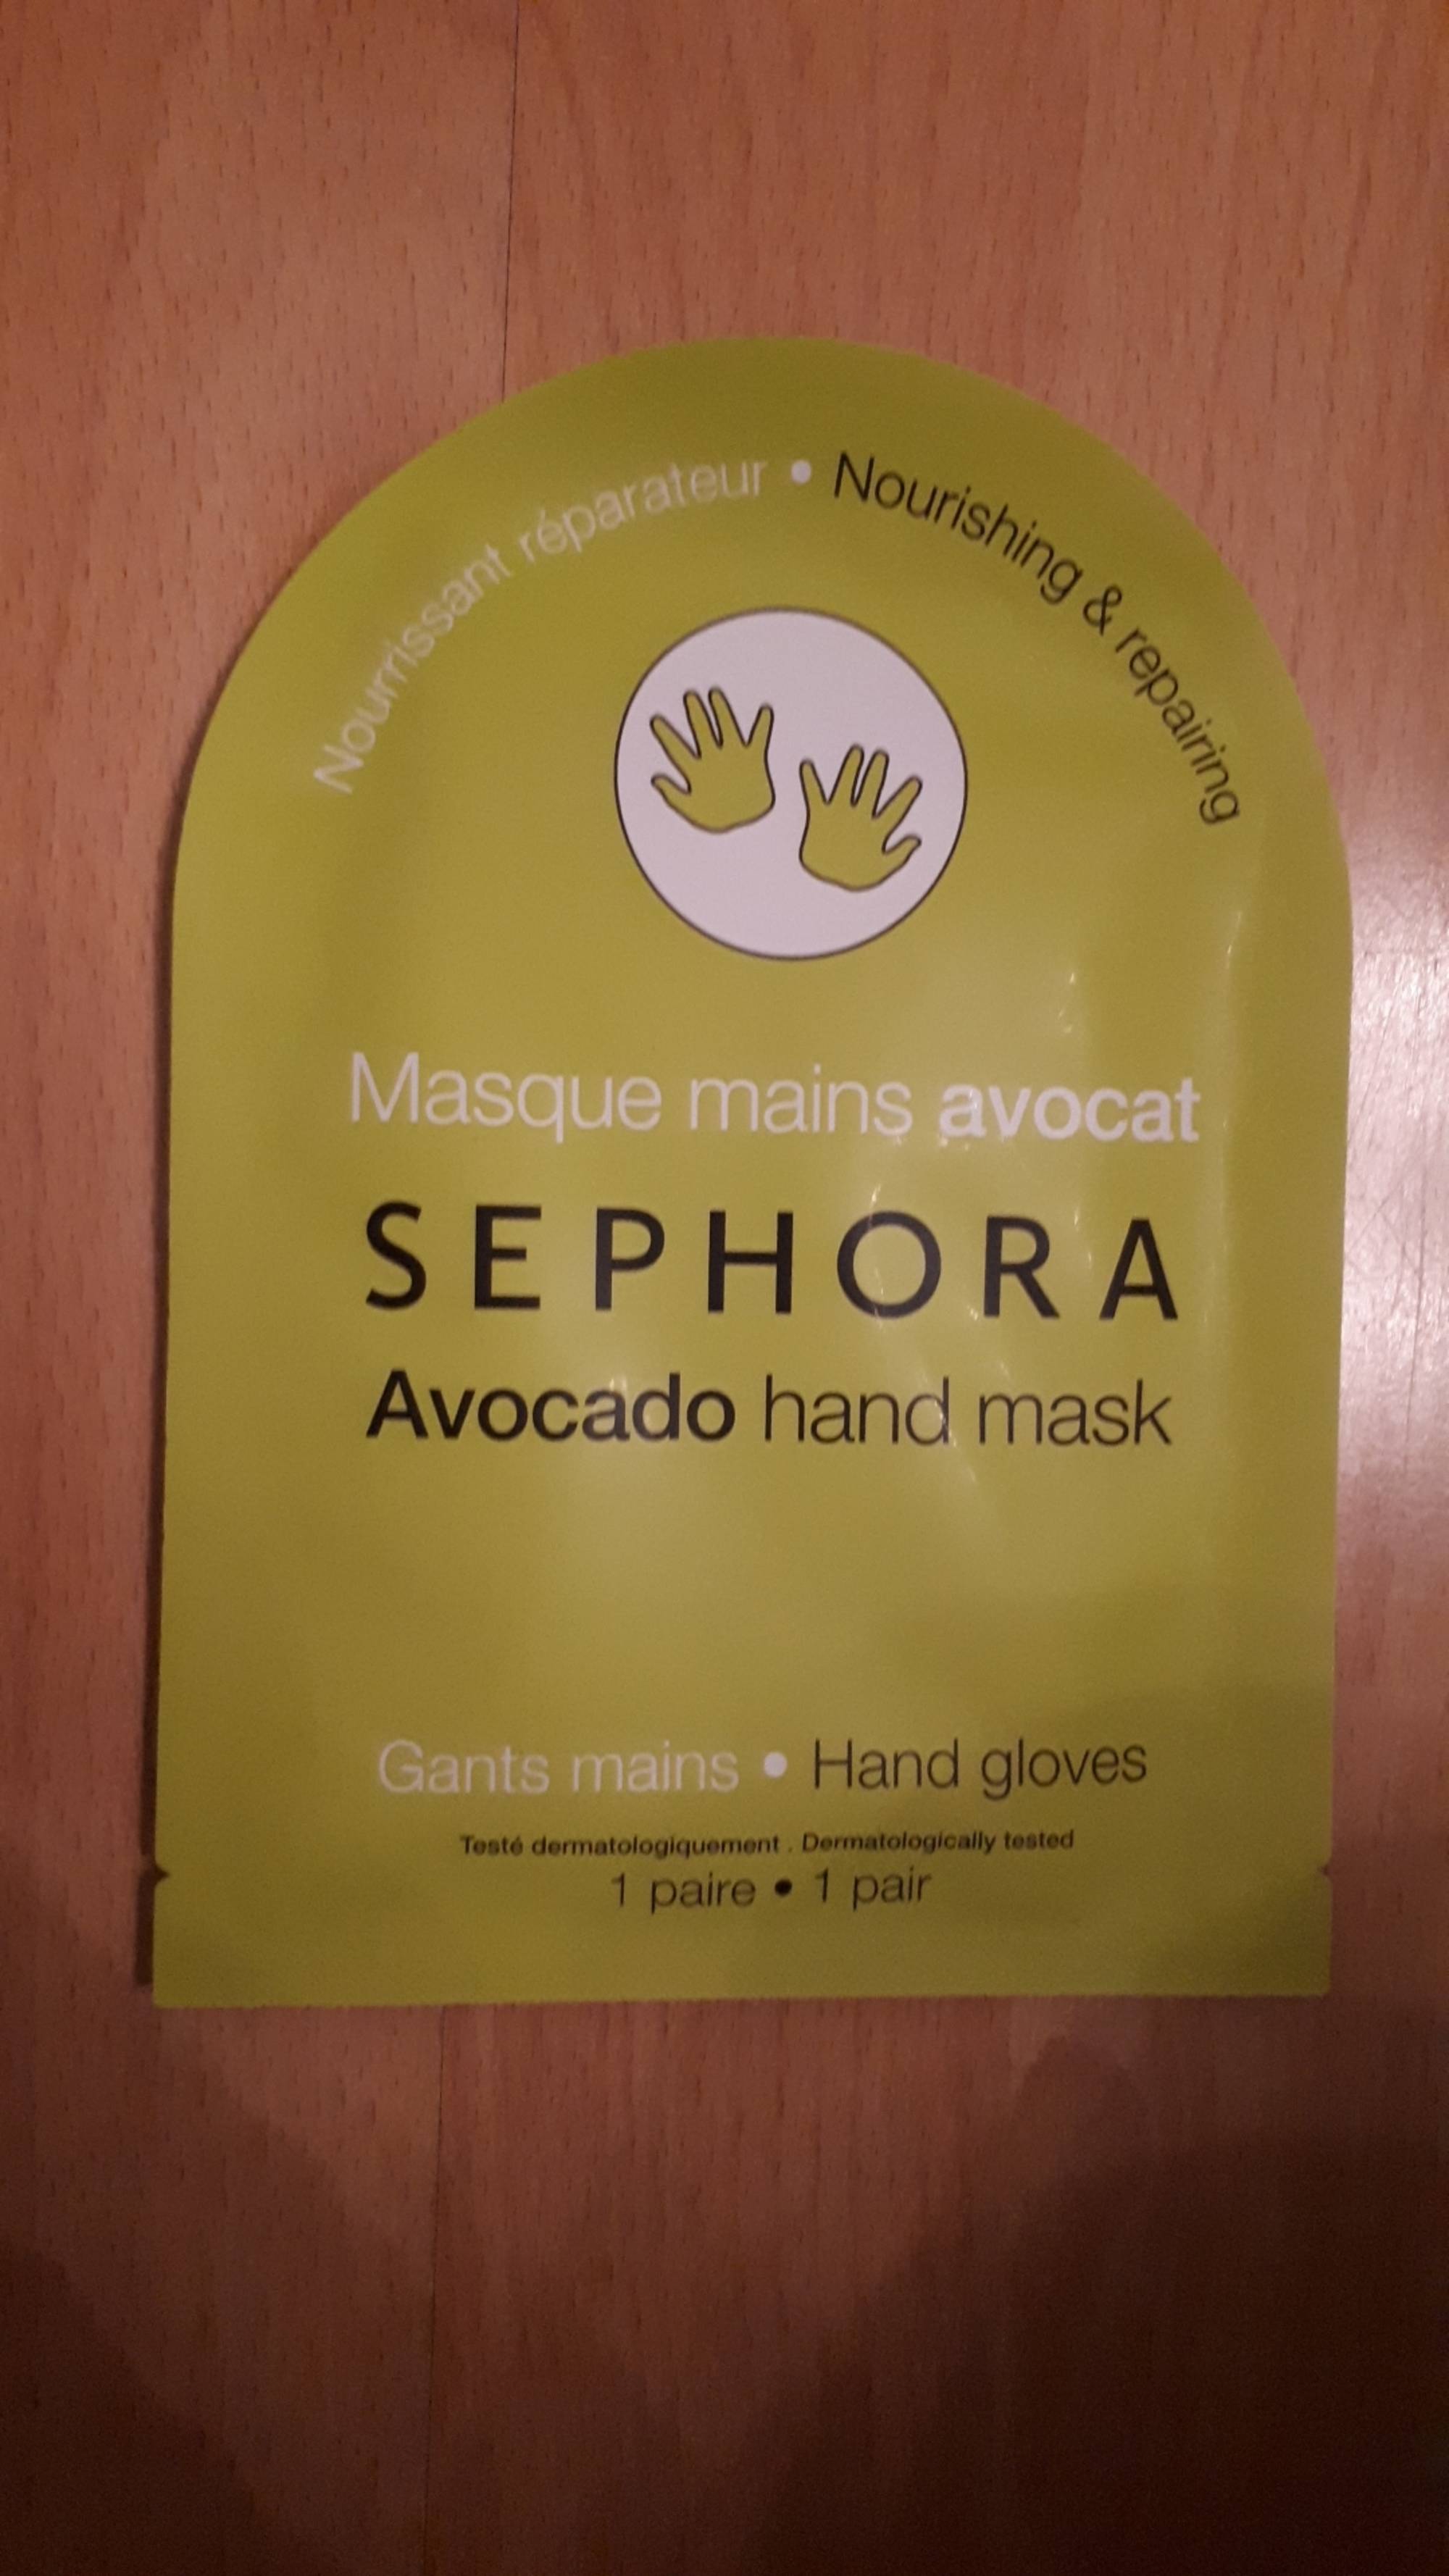 SEPHORA - Masque mains avocat - Gants mains